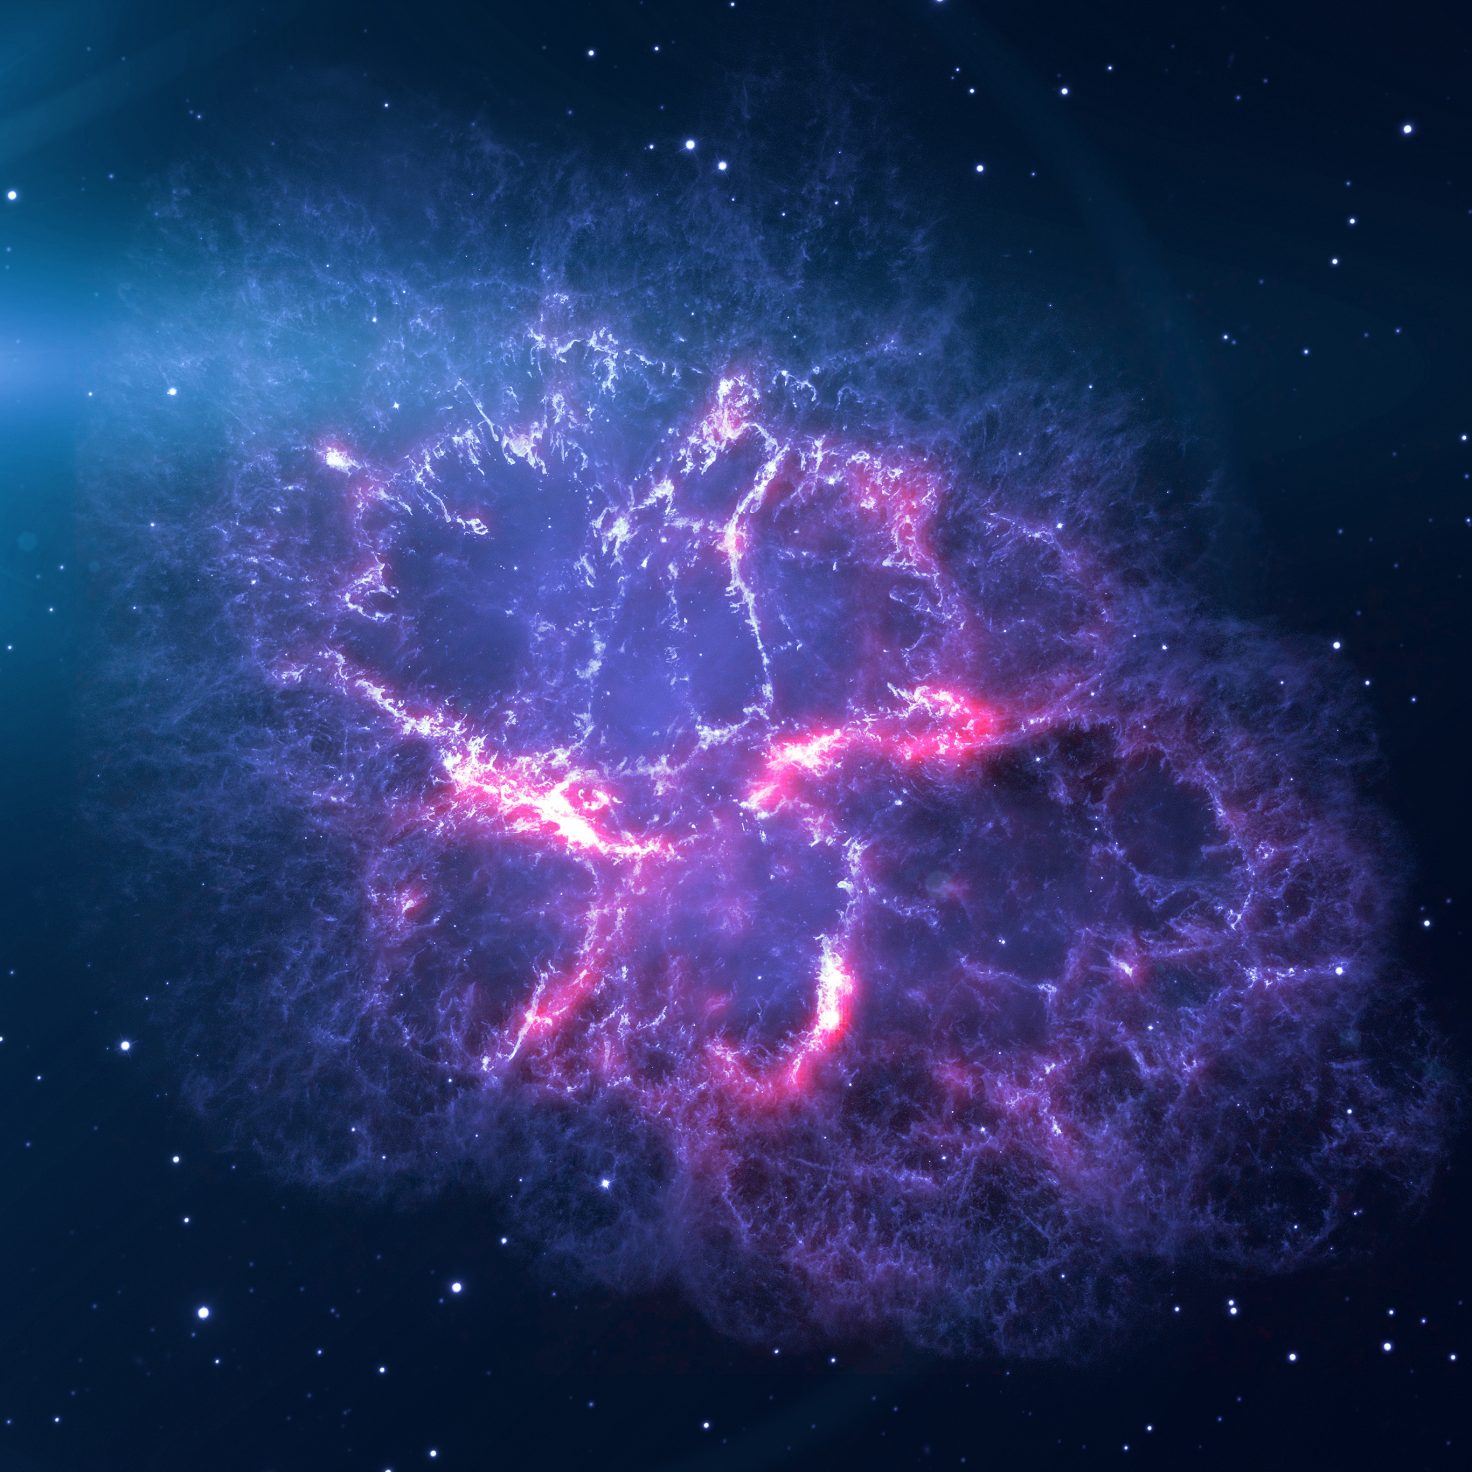 space-astronomy-galaxy-dark-purple-star-flare-ipad-pro-1472×1472